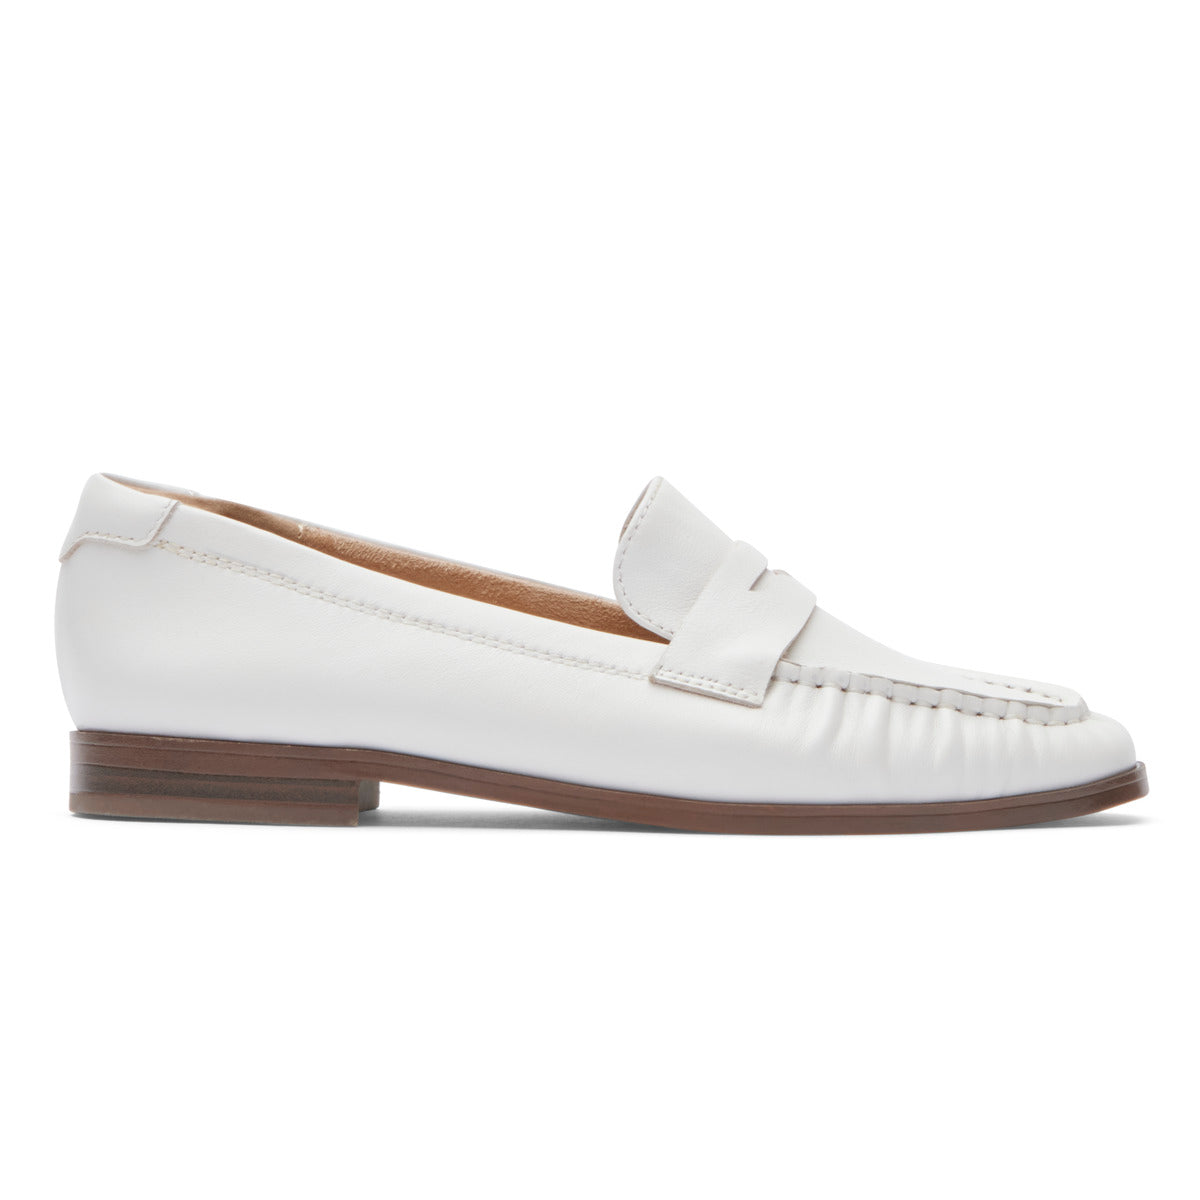 Reel Legends Women's Size 6.5 Boat Loafer Shoes Tan White.